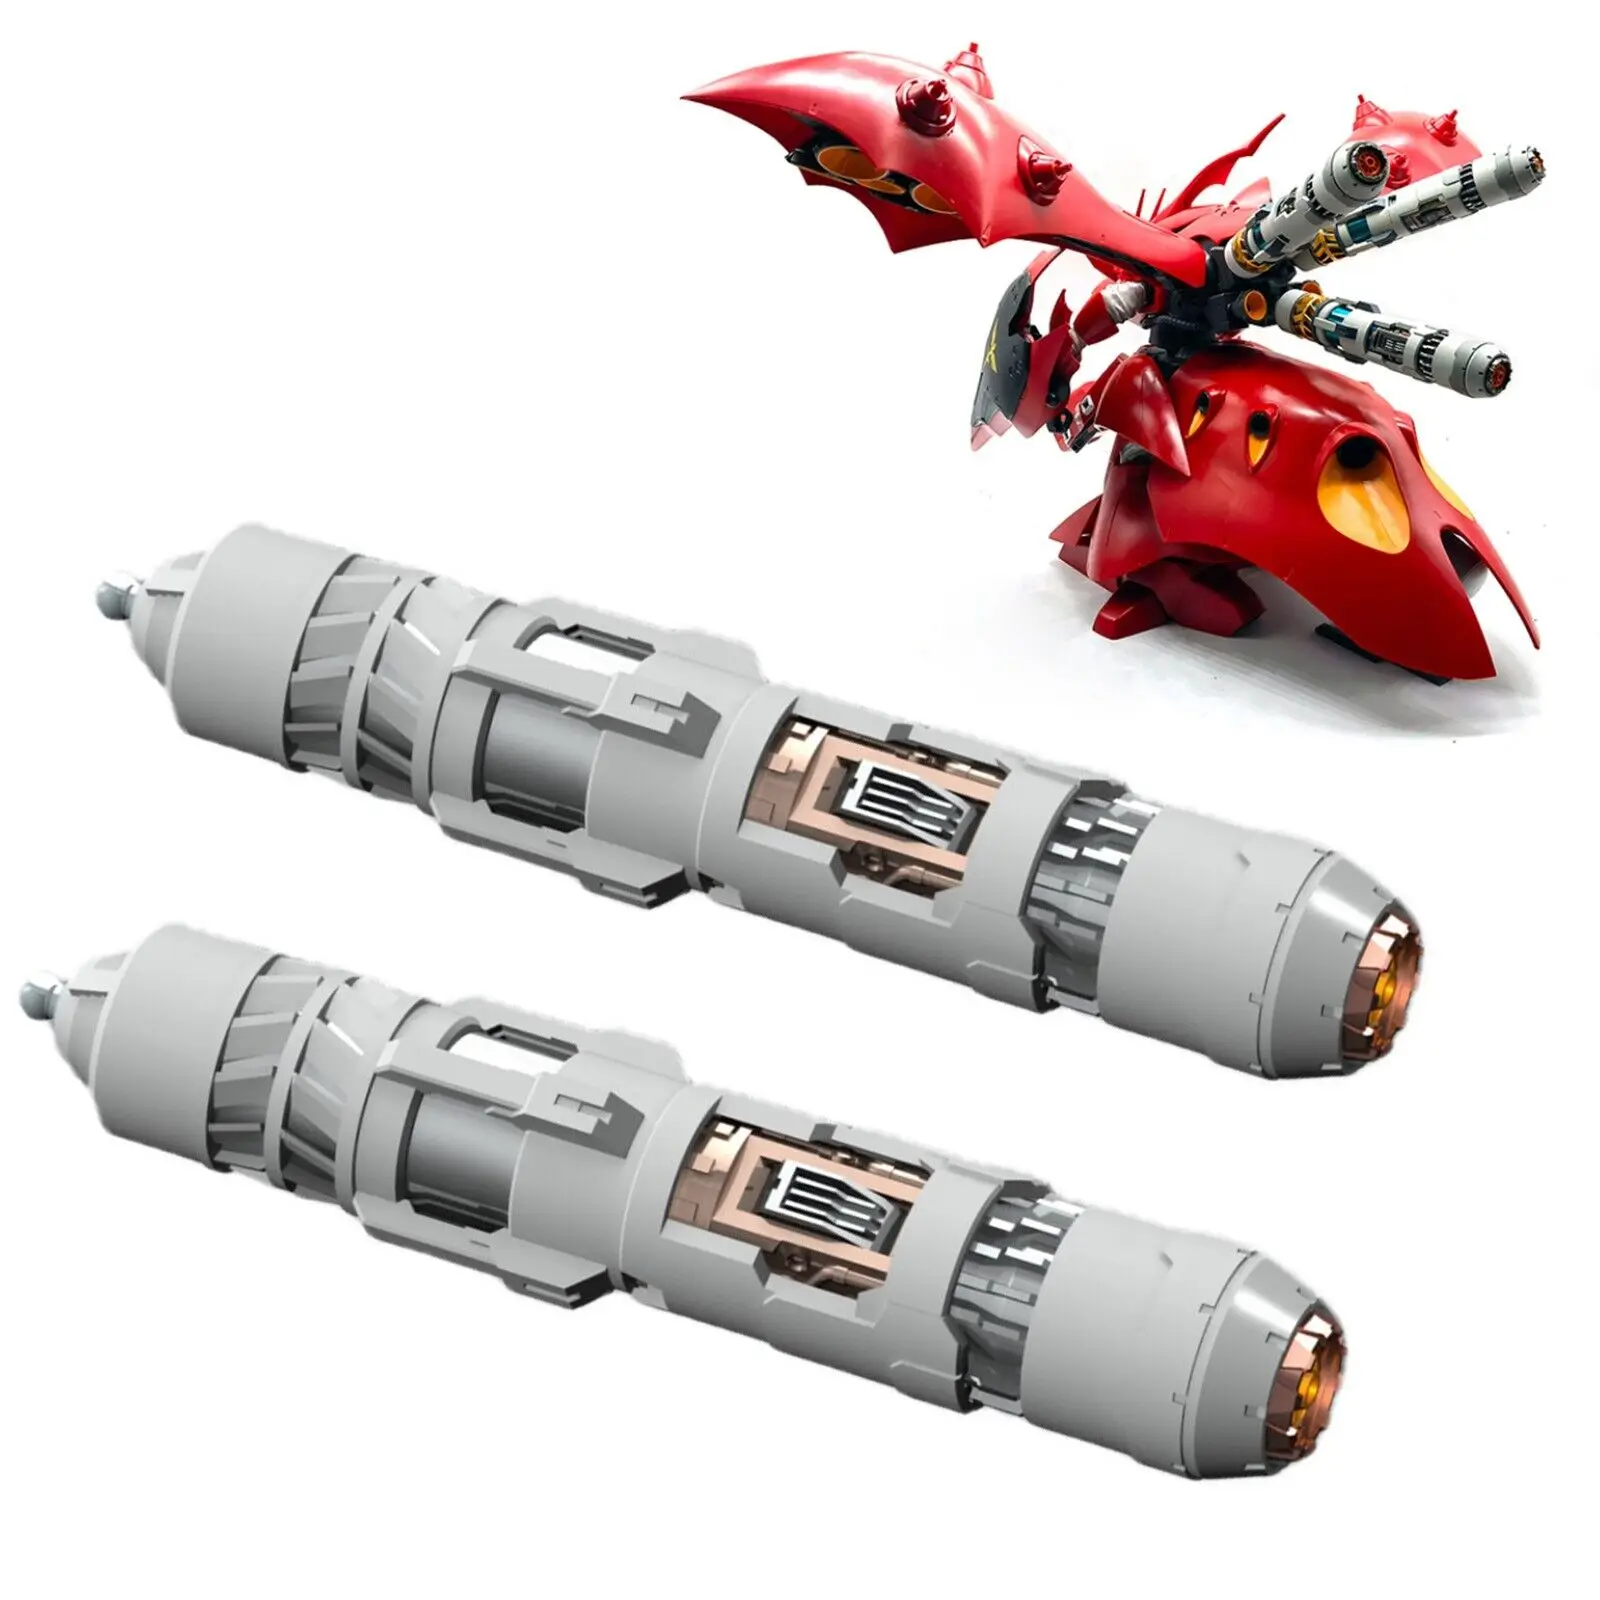 

2Pc Fuel Tank Kit For Gundam HG 1/144 Nightingale Model Accessories 3D Printed Fuel Rod For MG 1/100 Sazabi Sinanju Stein ver ka